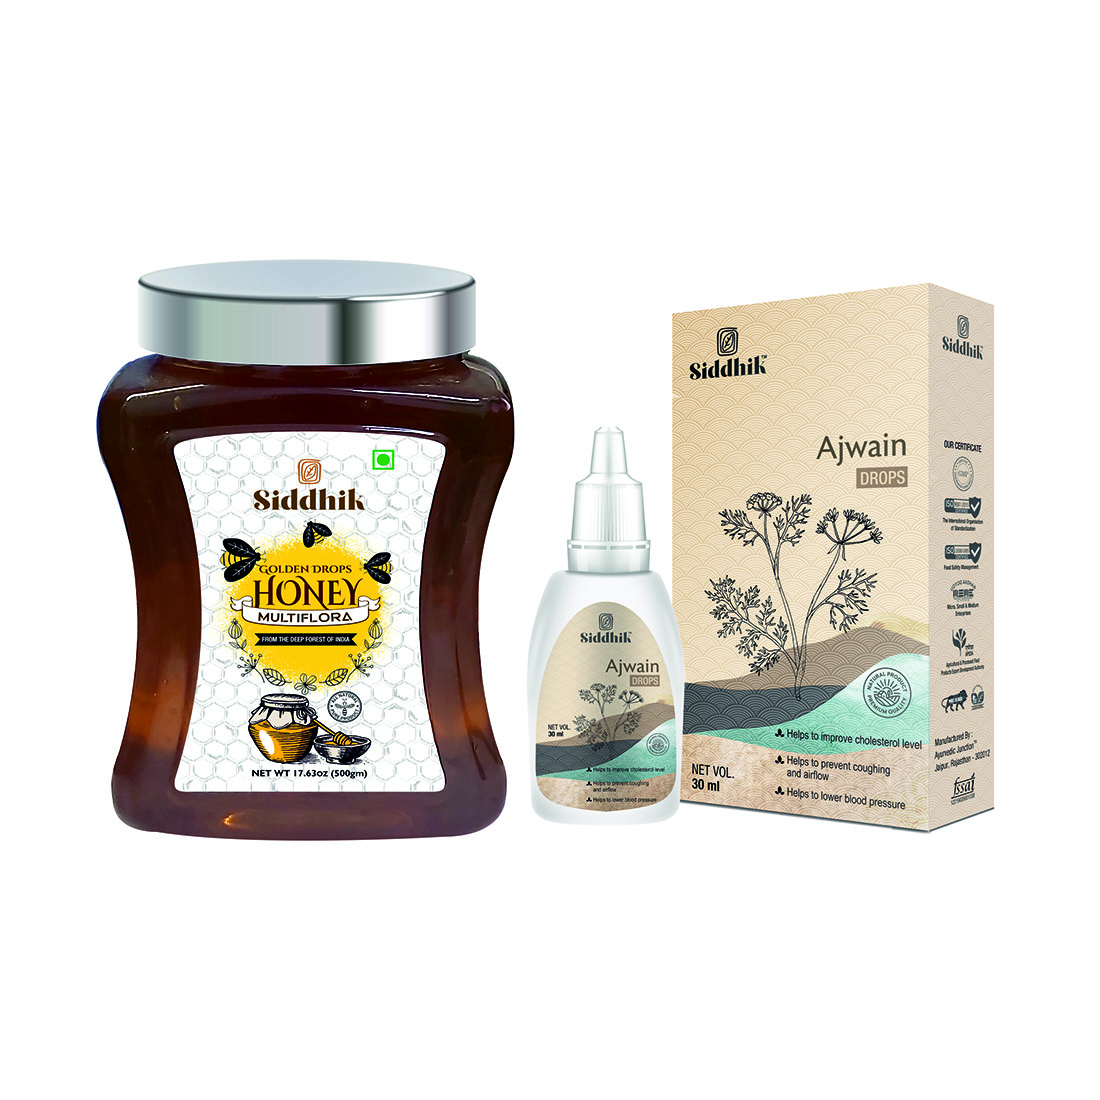 Siddhik Golden Drops Multiflora Honey 500 grams with Ajwain Drops 30 ML